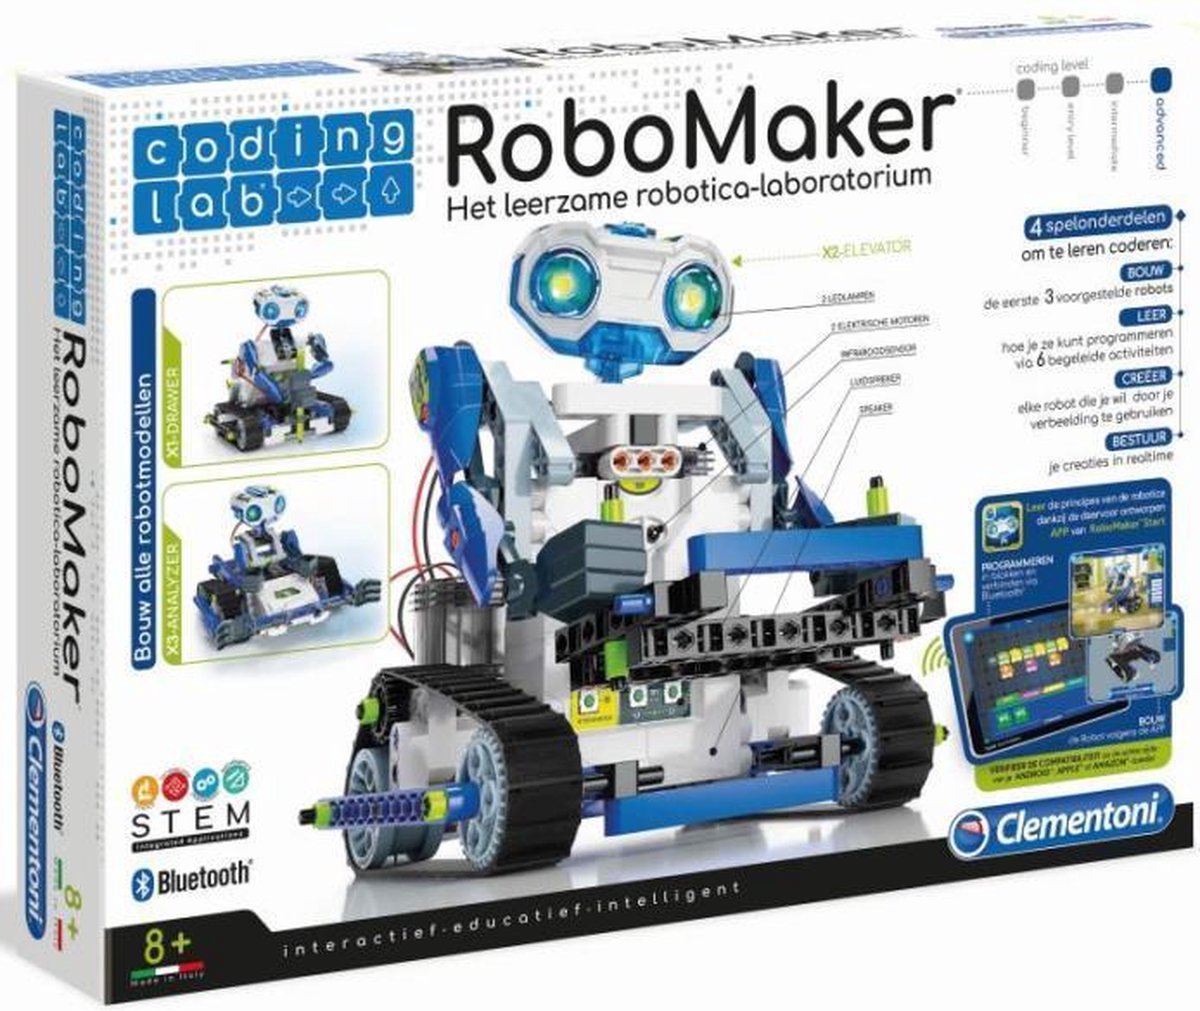 Clementoni Coding Lab - Robomaker Start - Robot speelgoed - STEM-speelgoed  | bol.com